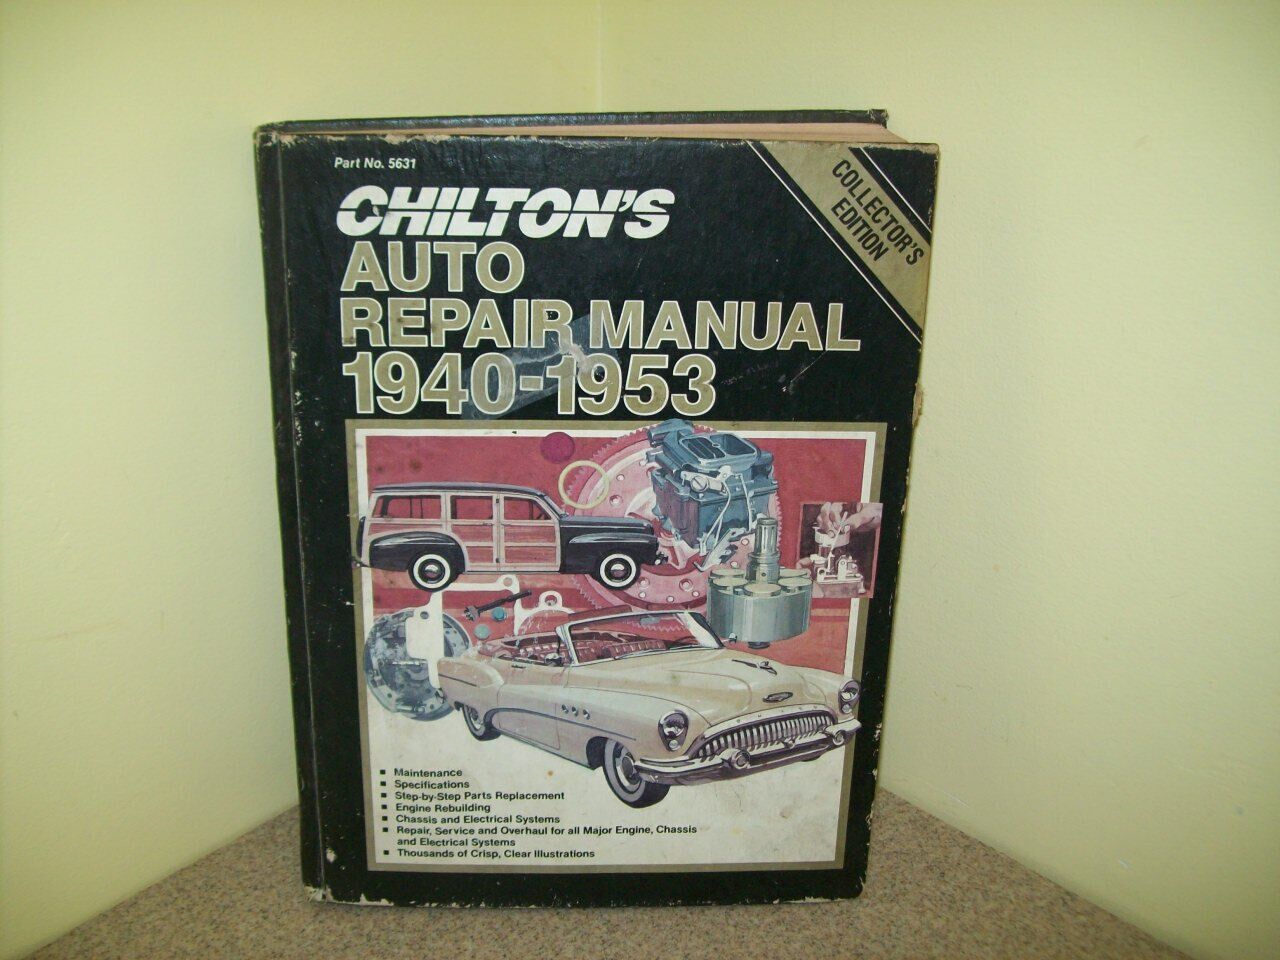 Vintage CHILTON'S 1940-1953 Auto Repair Manual Hardcover Book #5631